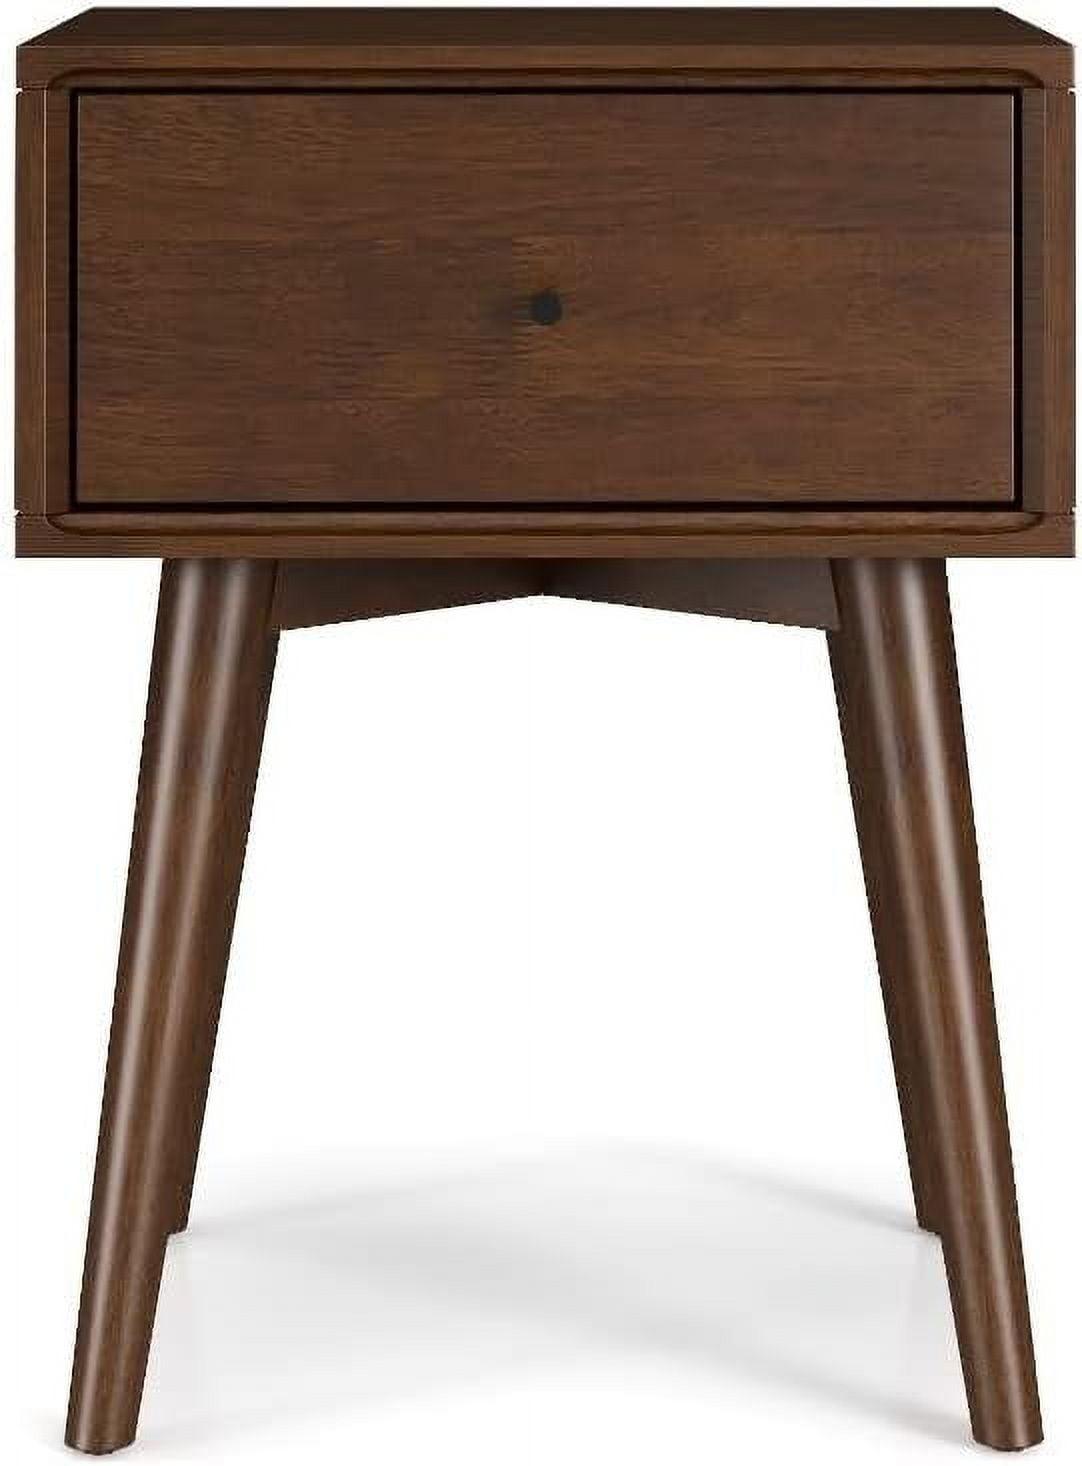 Avery Mid-Century Modern Brown Walnut Wood Nightstand with Storage Drawer